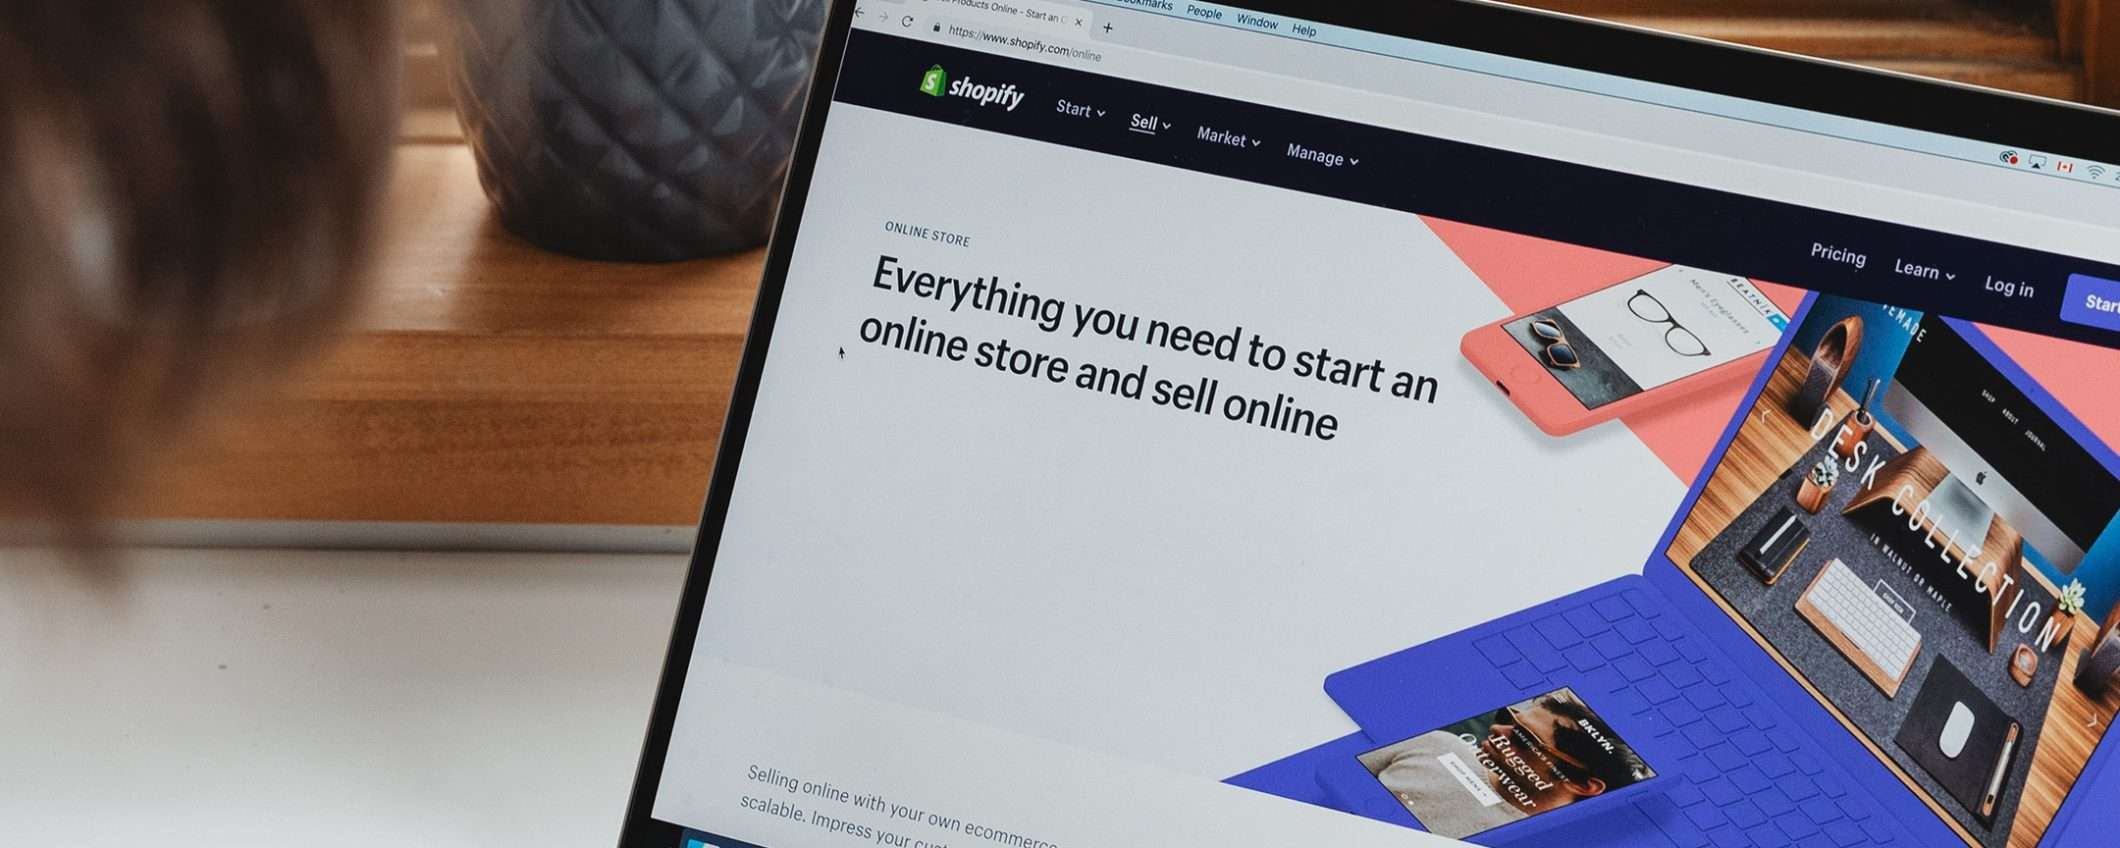 Impara a creare un negozio online su Shopify